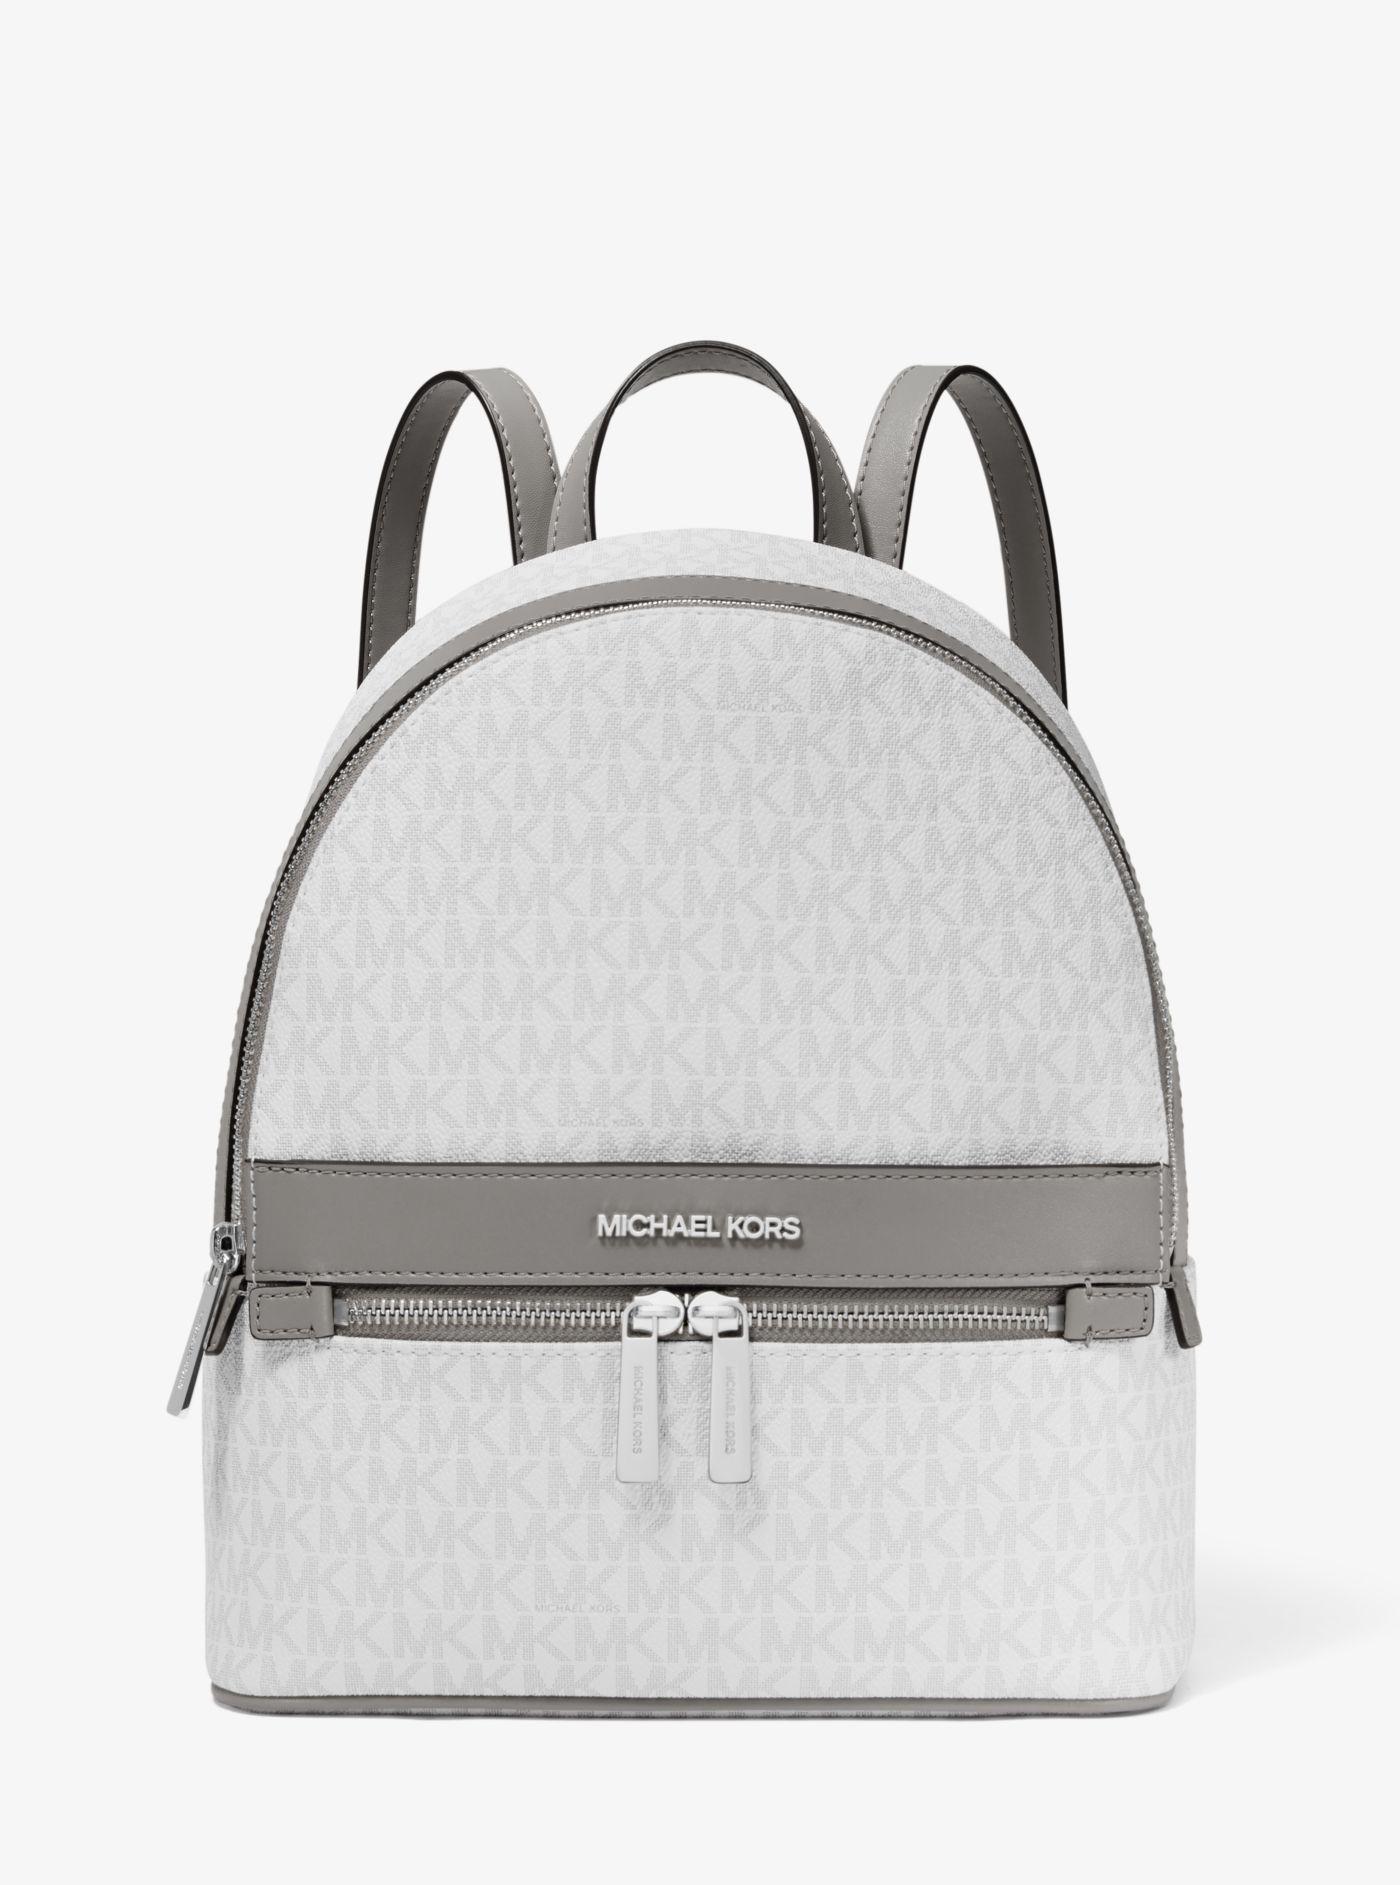 Michael Kors Kenly Medium Logo Backpack in Gray | Lyst